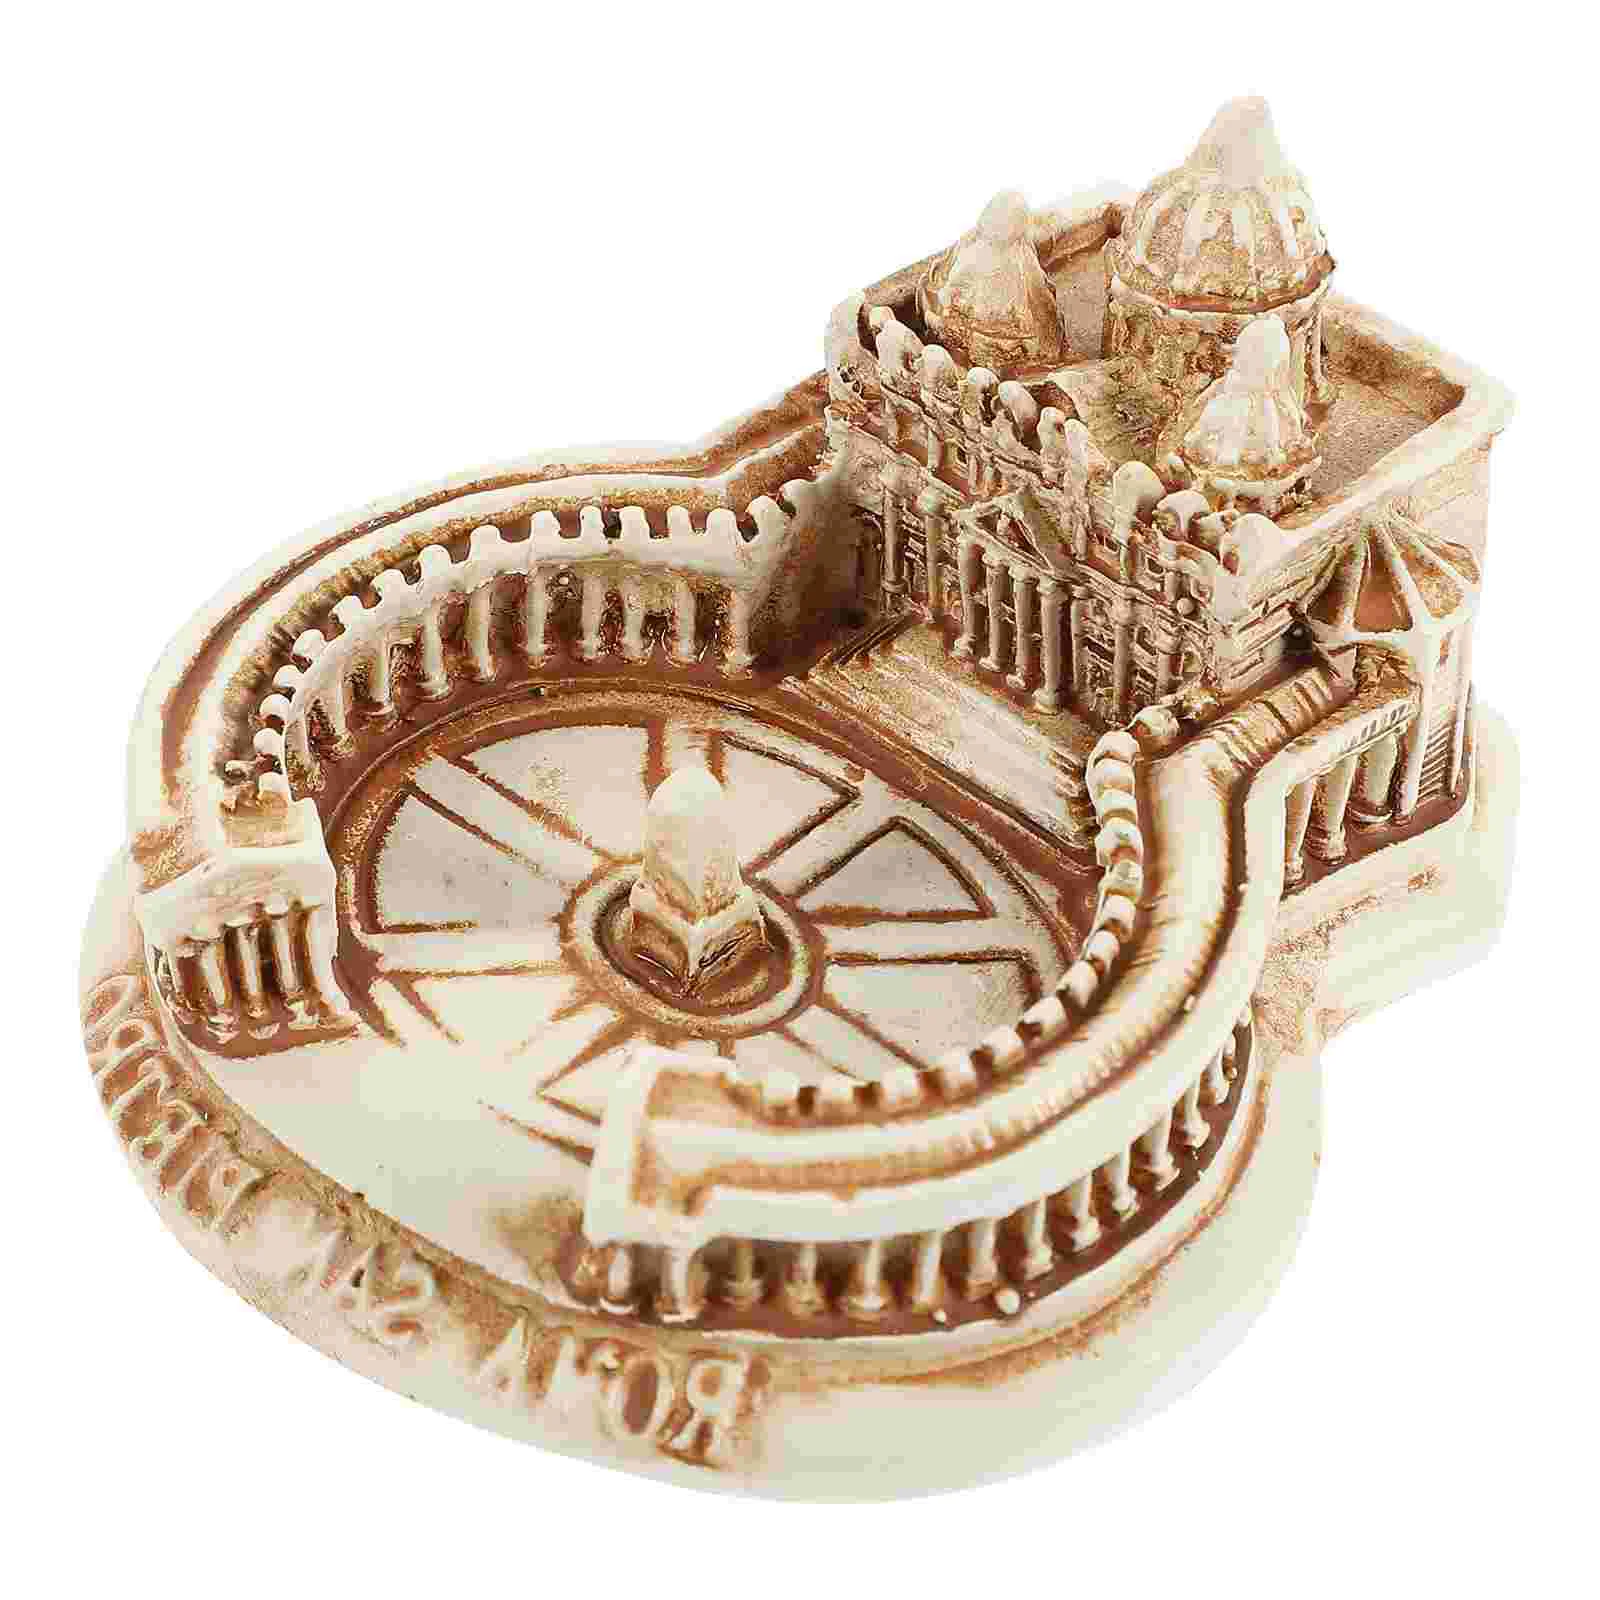 

Simulation Building Model Architectural Prop Desktop Saint Peter's Basilica Mini Gifts Resin Crafts House Models